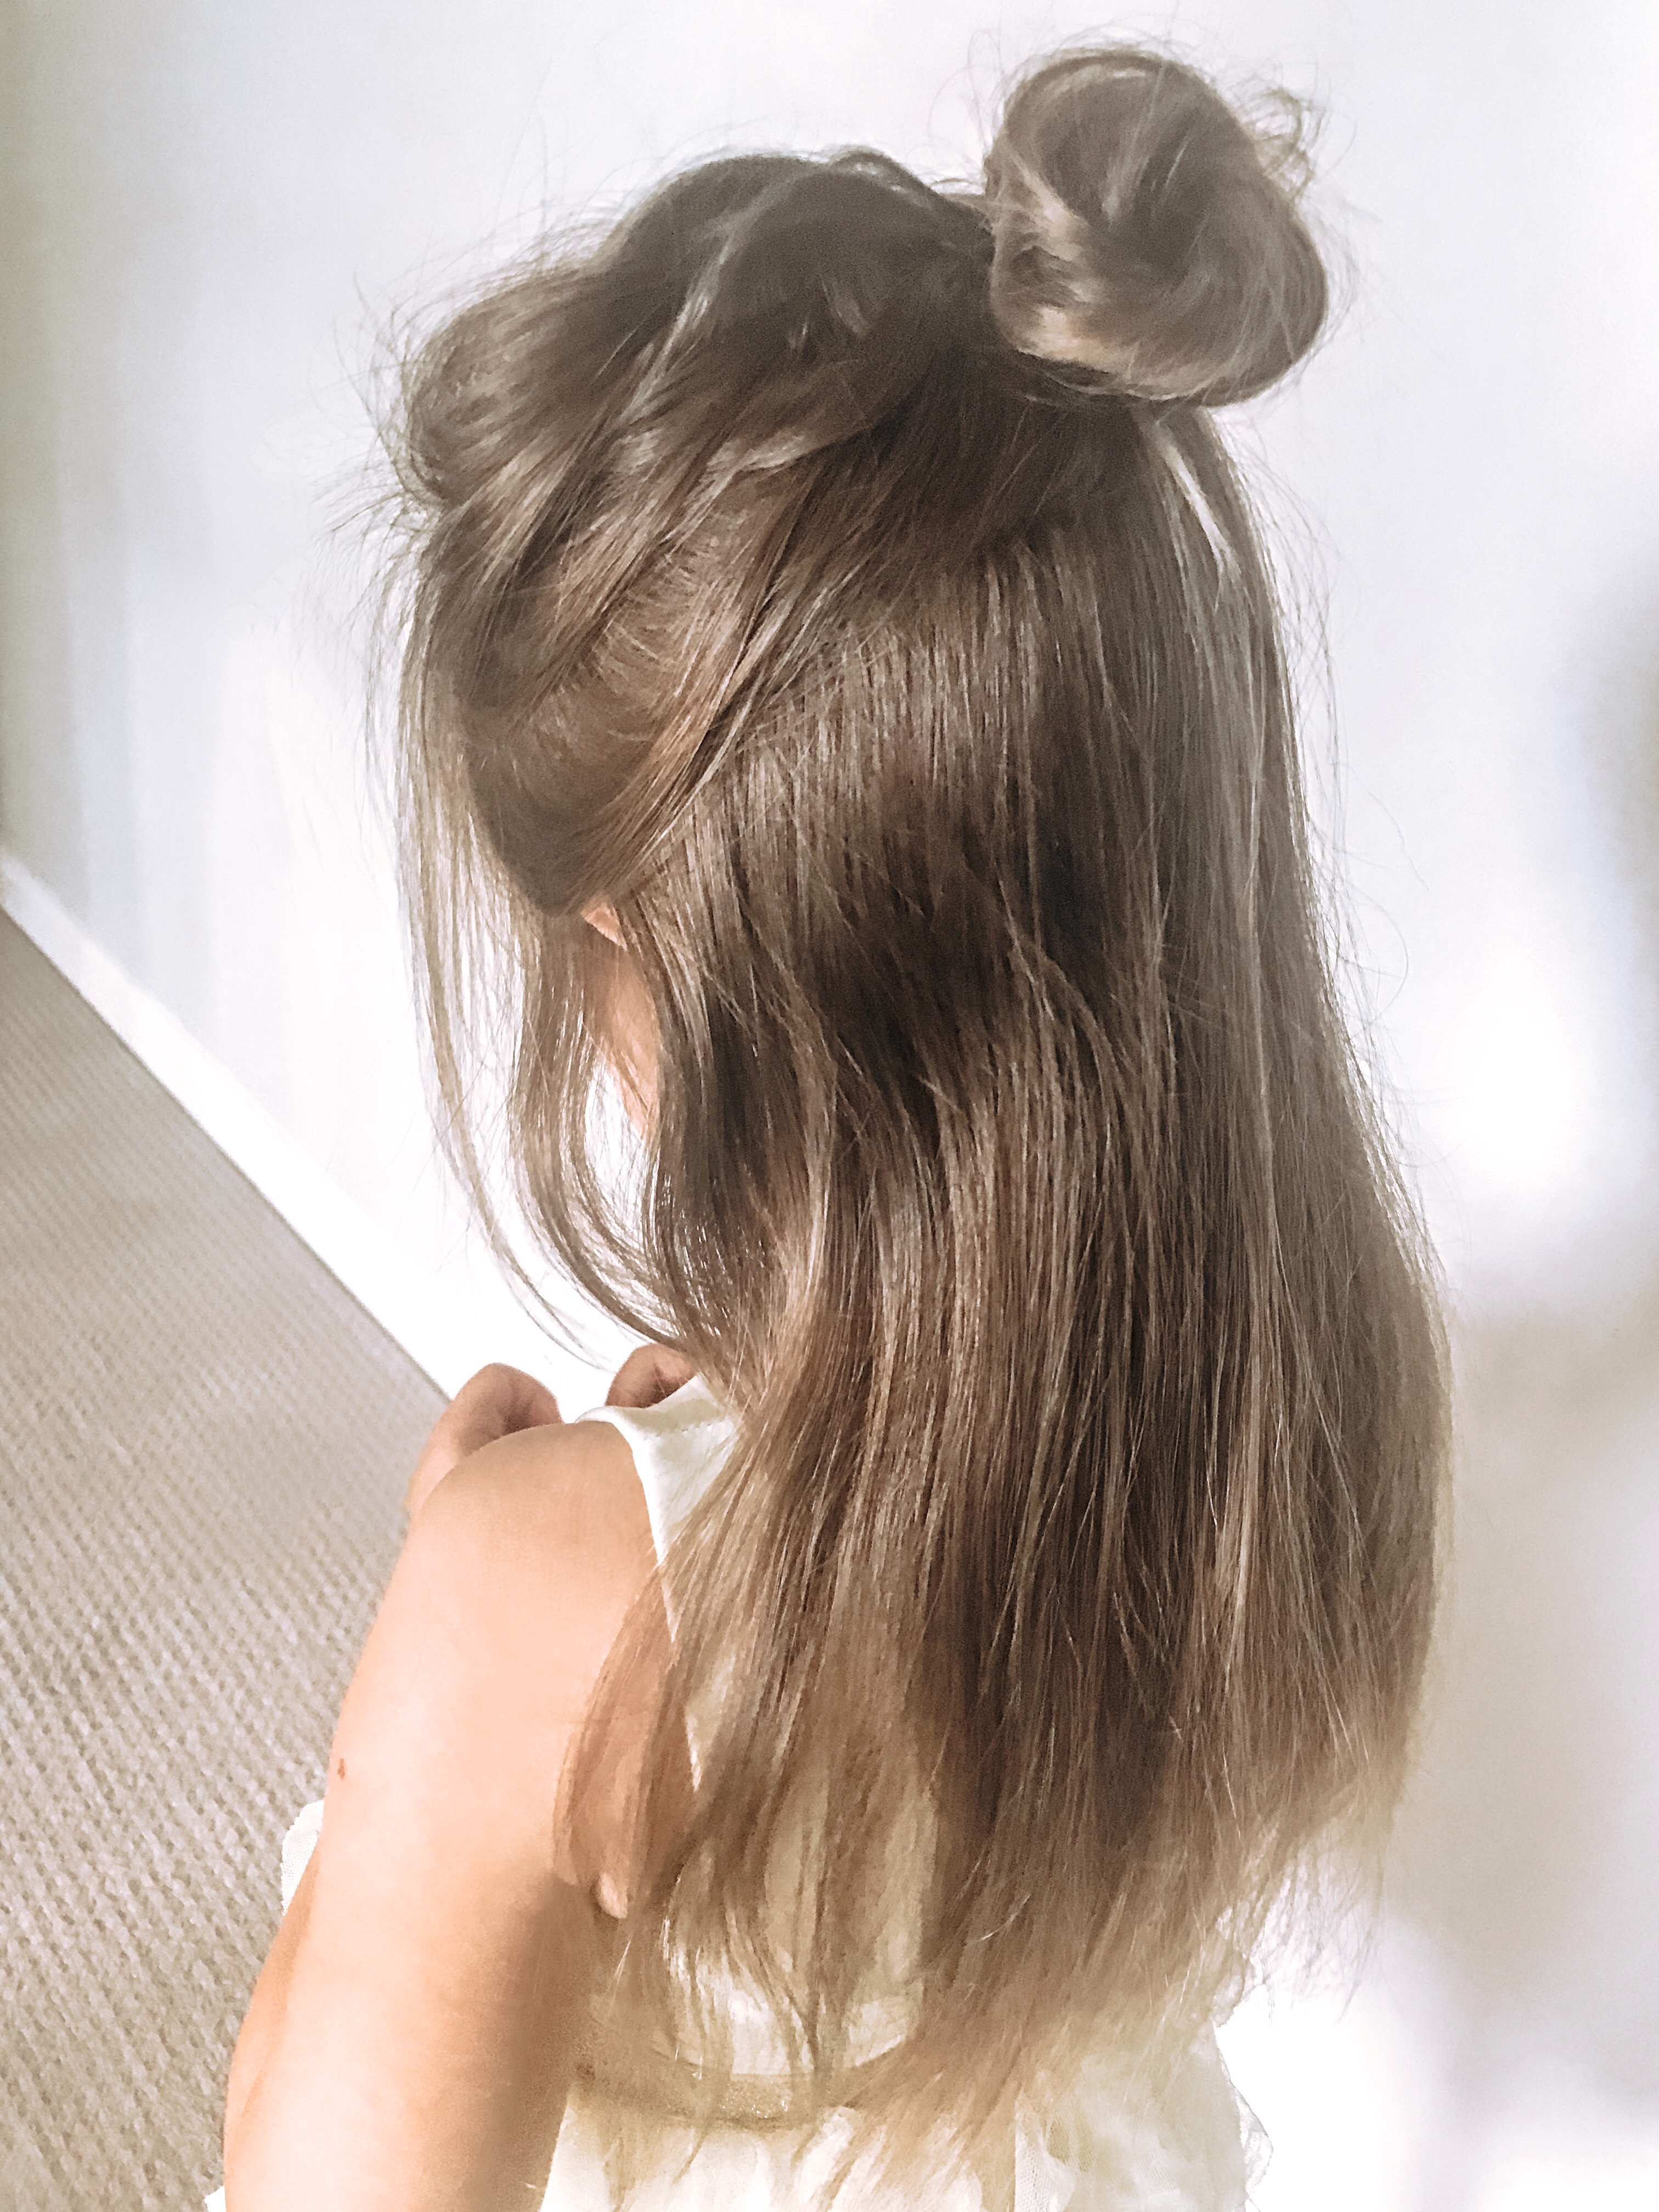 Disney Princesses - Belle Magic Hair by SilentMermaid21 on DeviantArt